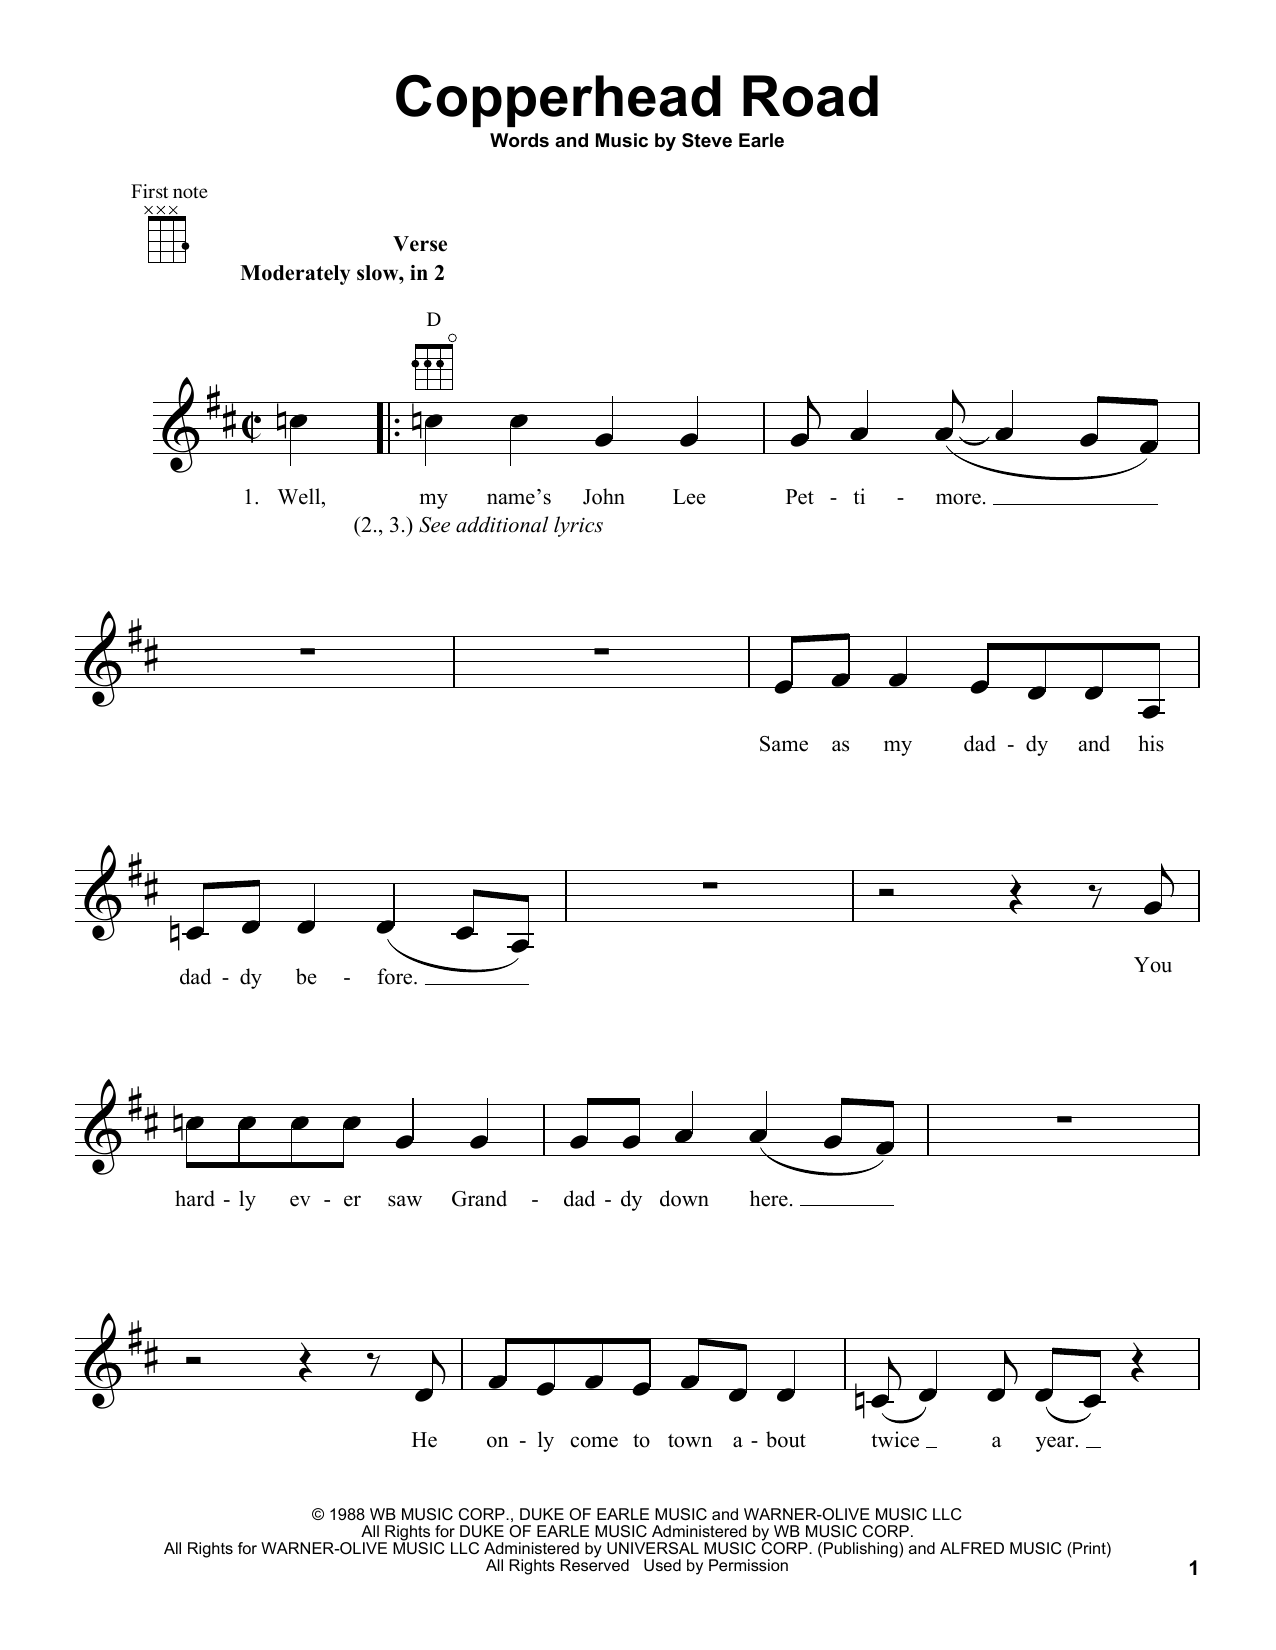 Steve Earle Copperhead Road Sheet Music Notes & Chords for Ukulele - Download or Print PDF